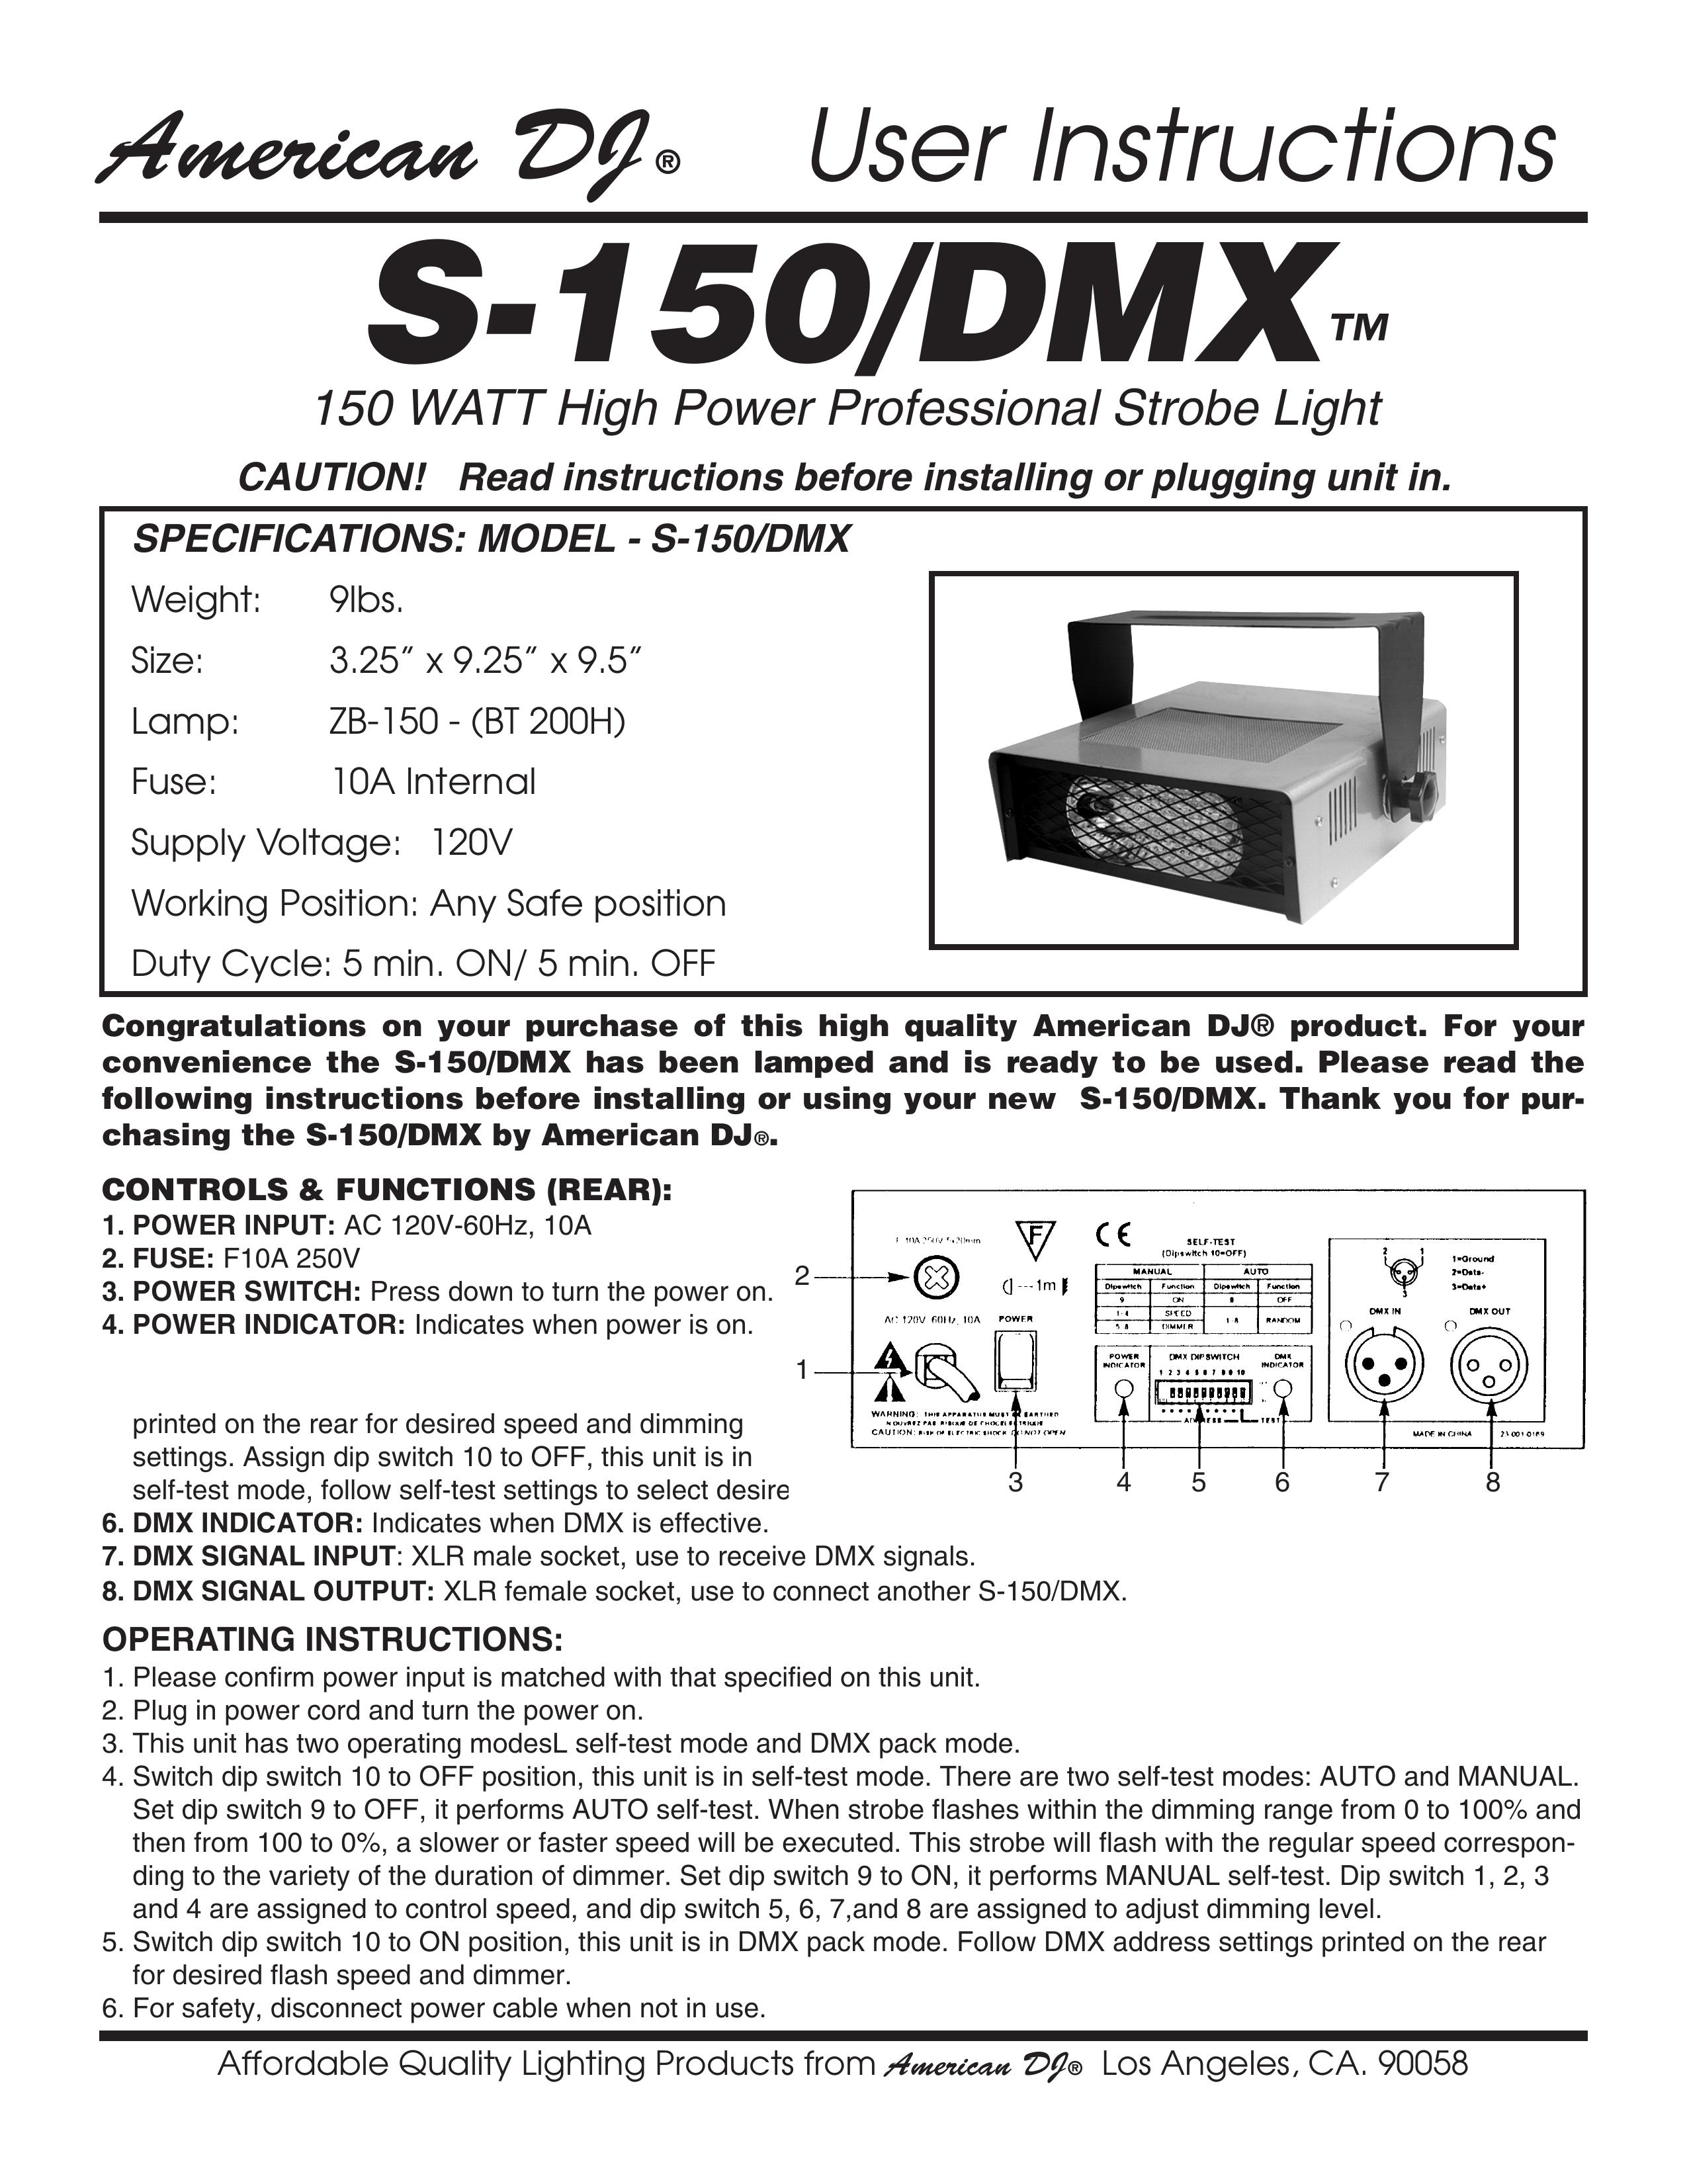 American DJ S-150/DMX Landscape Lighting User Manual